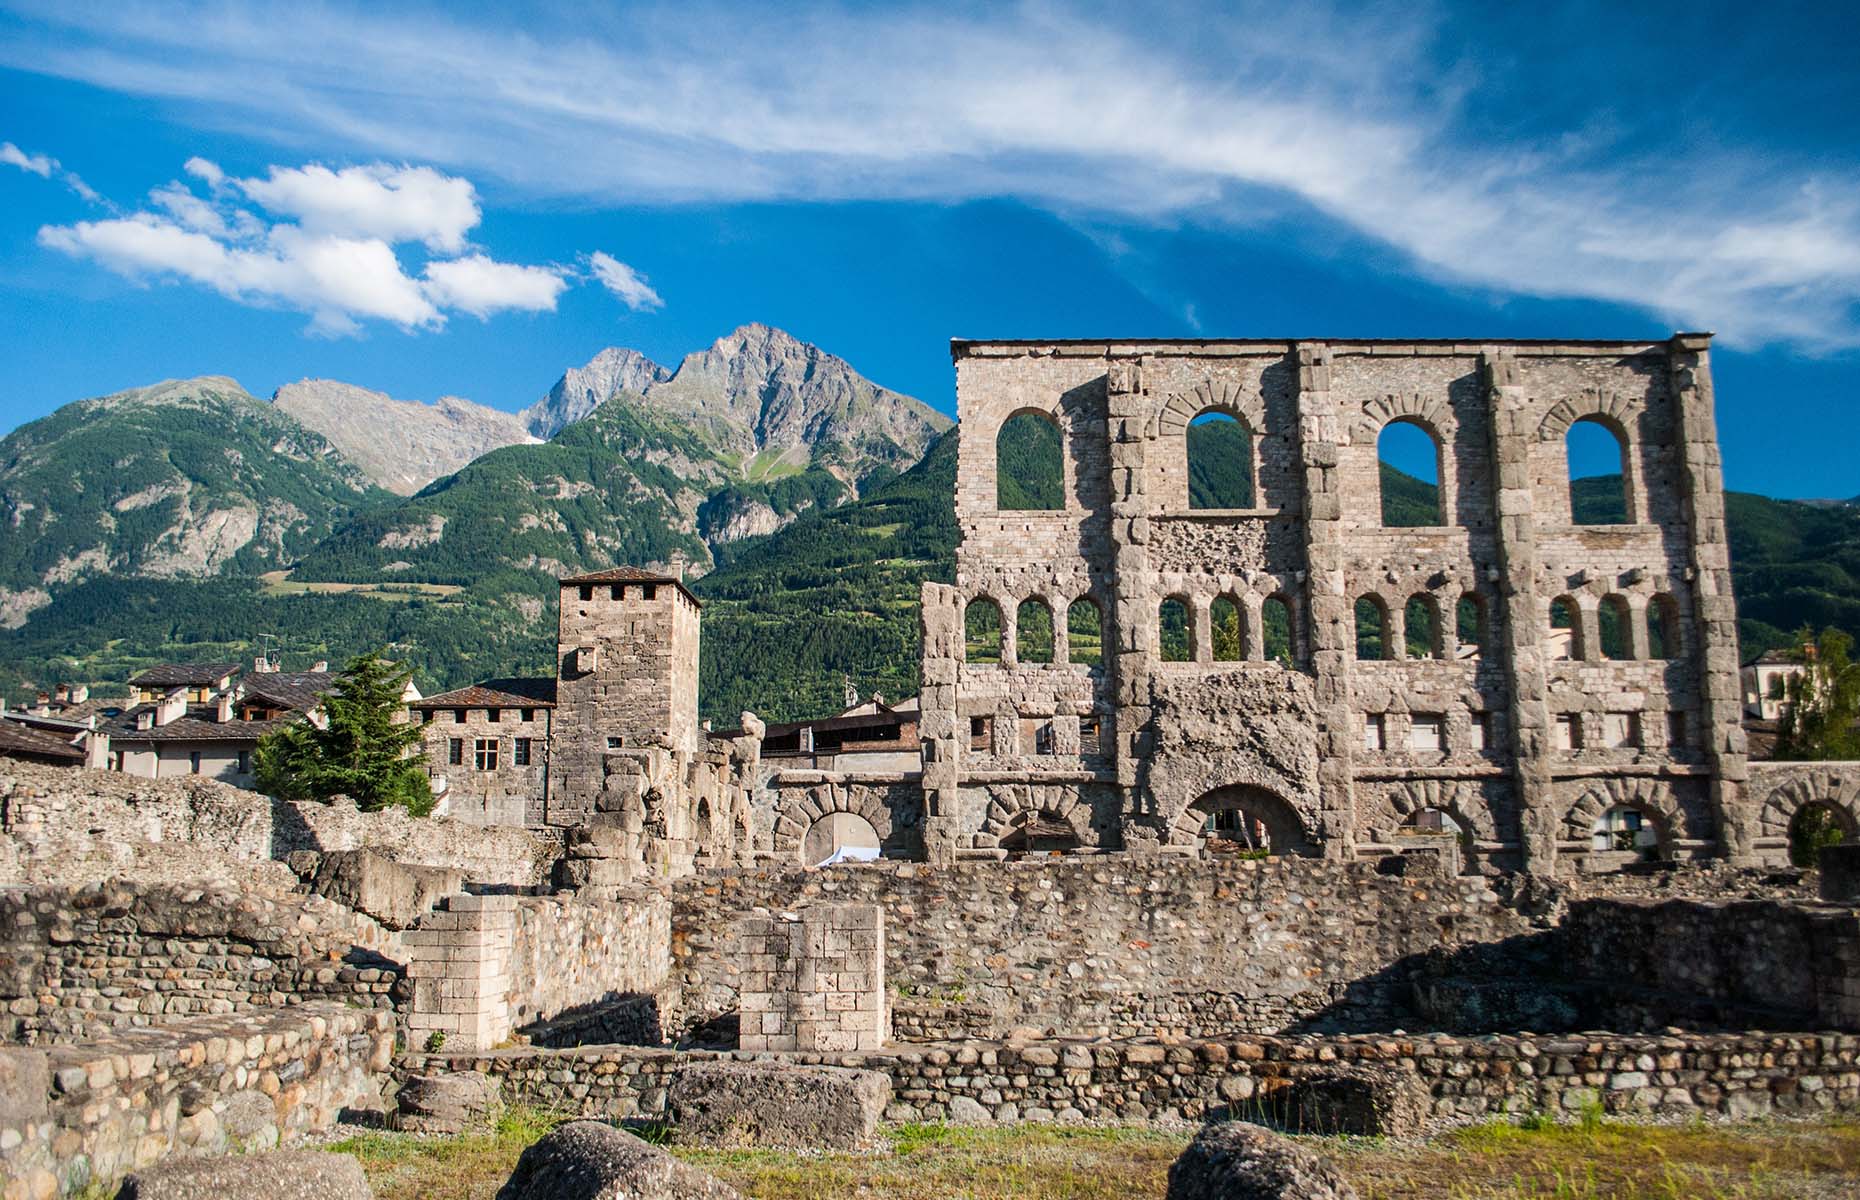 Aosta town Roman ruins (Image: Alxcrs/Shutterstock)